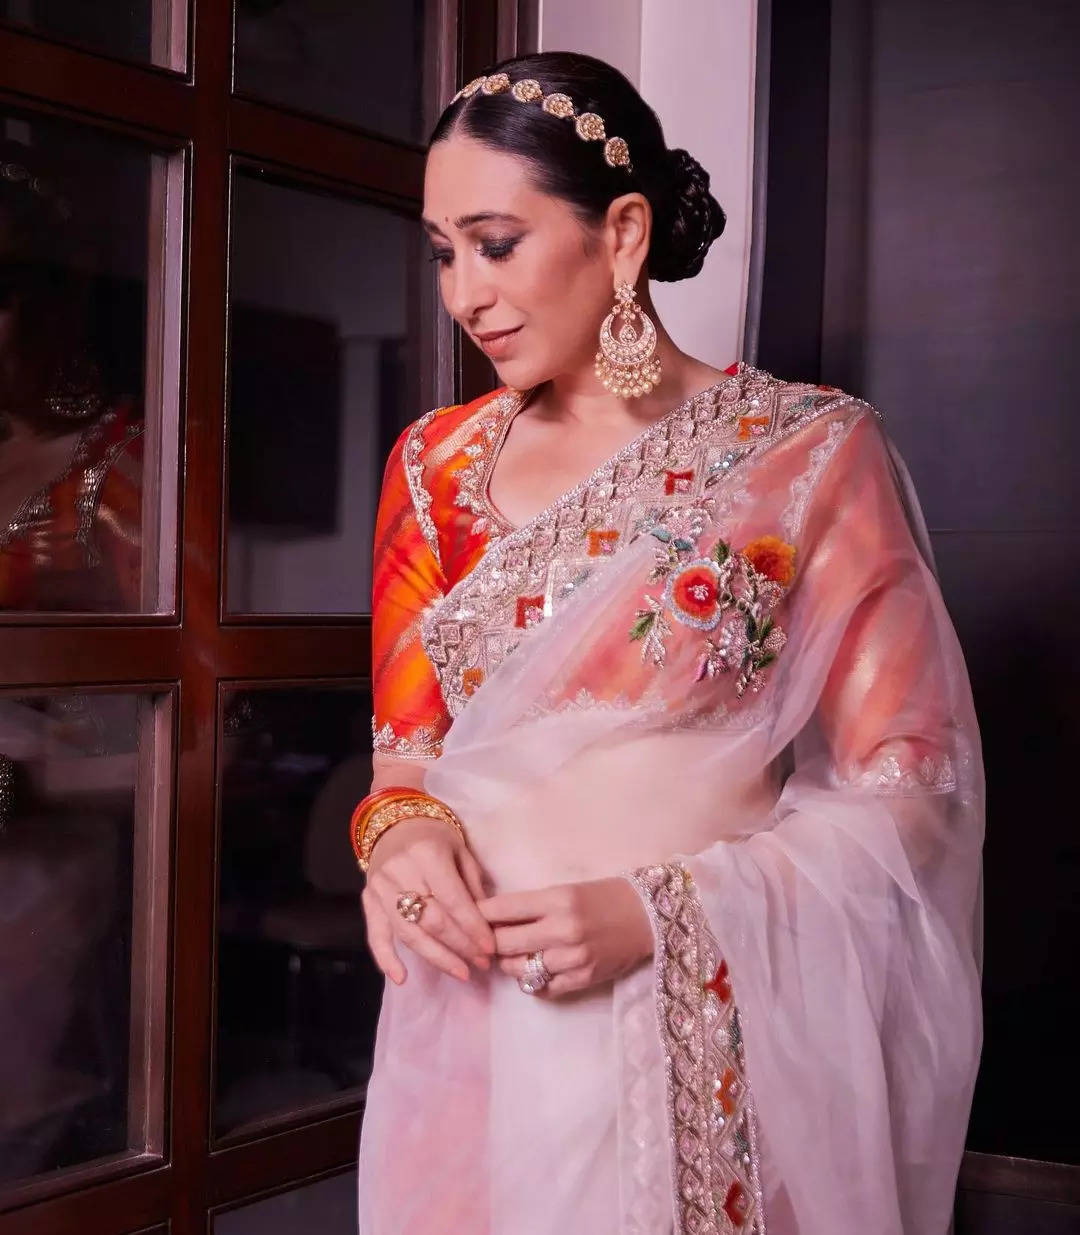 Kareena Kapoor Khan wore a striking pale pink Manish Malhotra sari to Alia  Bhatt and Ranbir Kapoor's nuptials